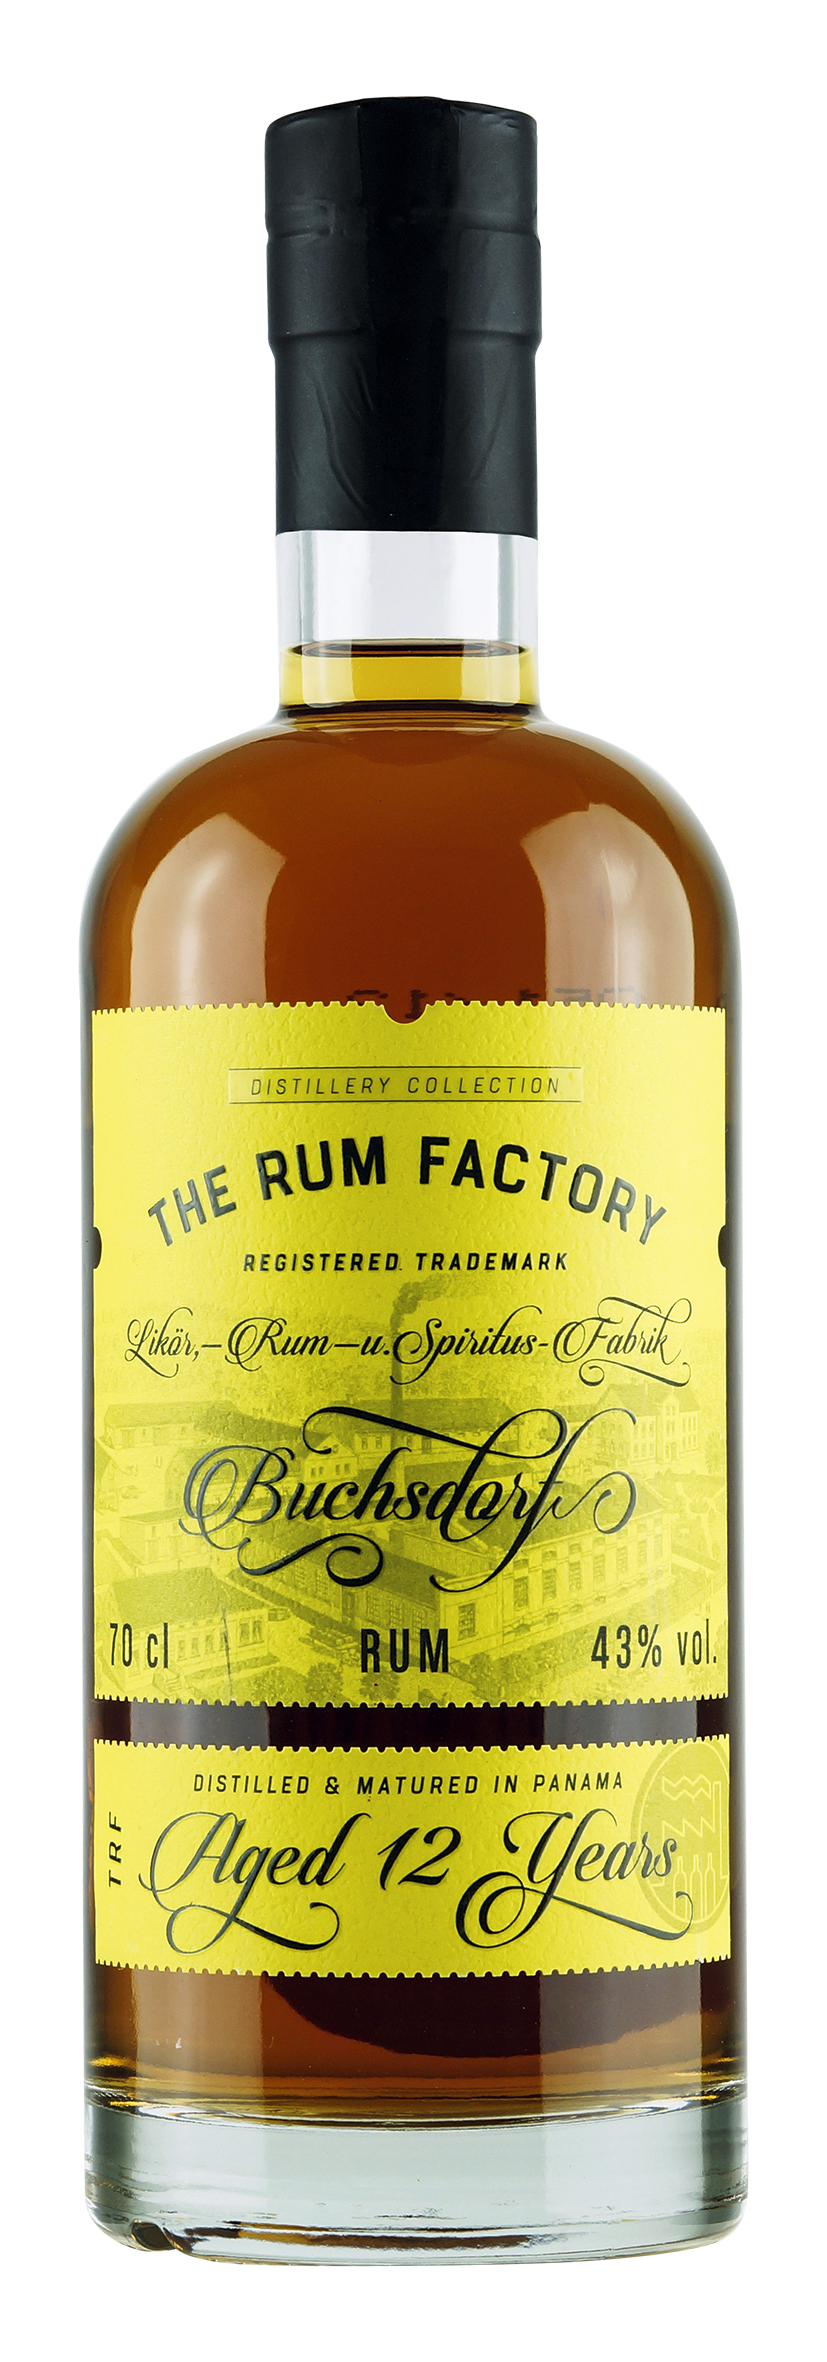 The Rum Factory Buchsdorf Aged 12 Years 0